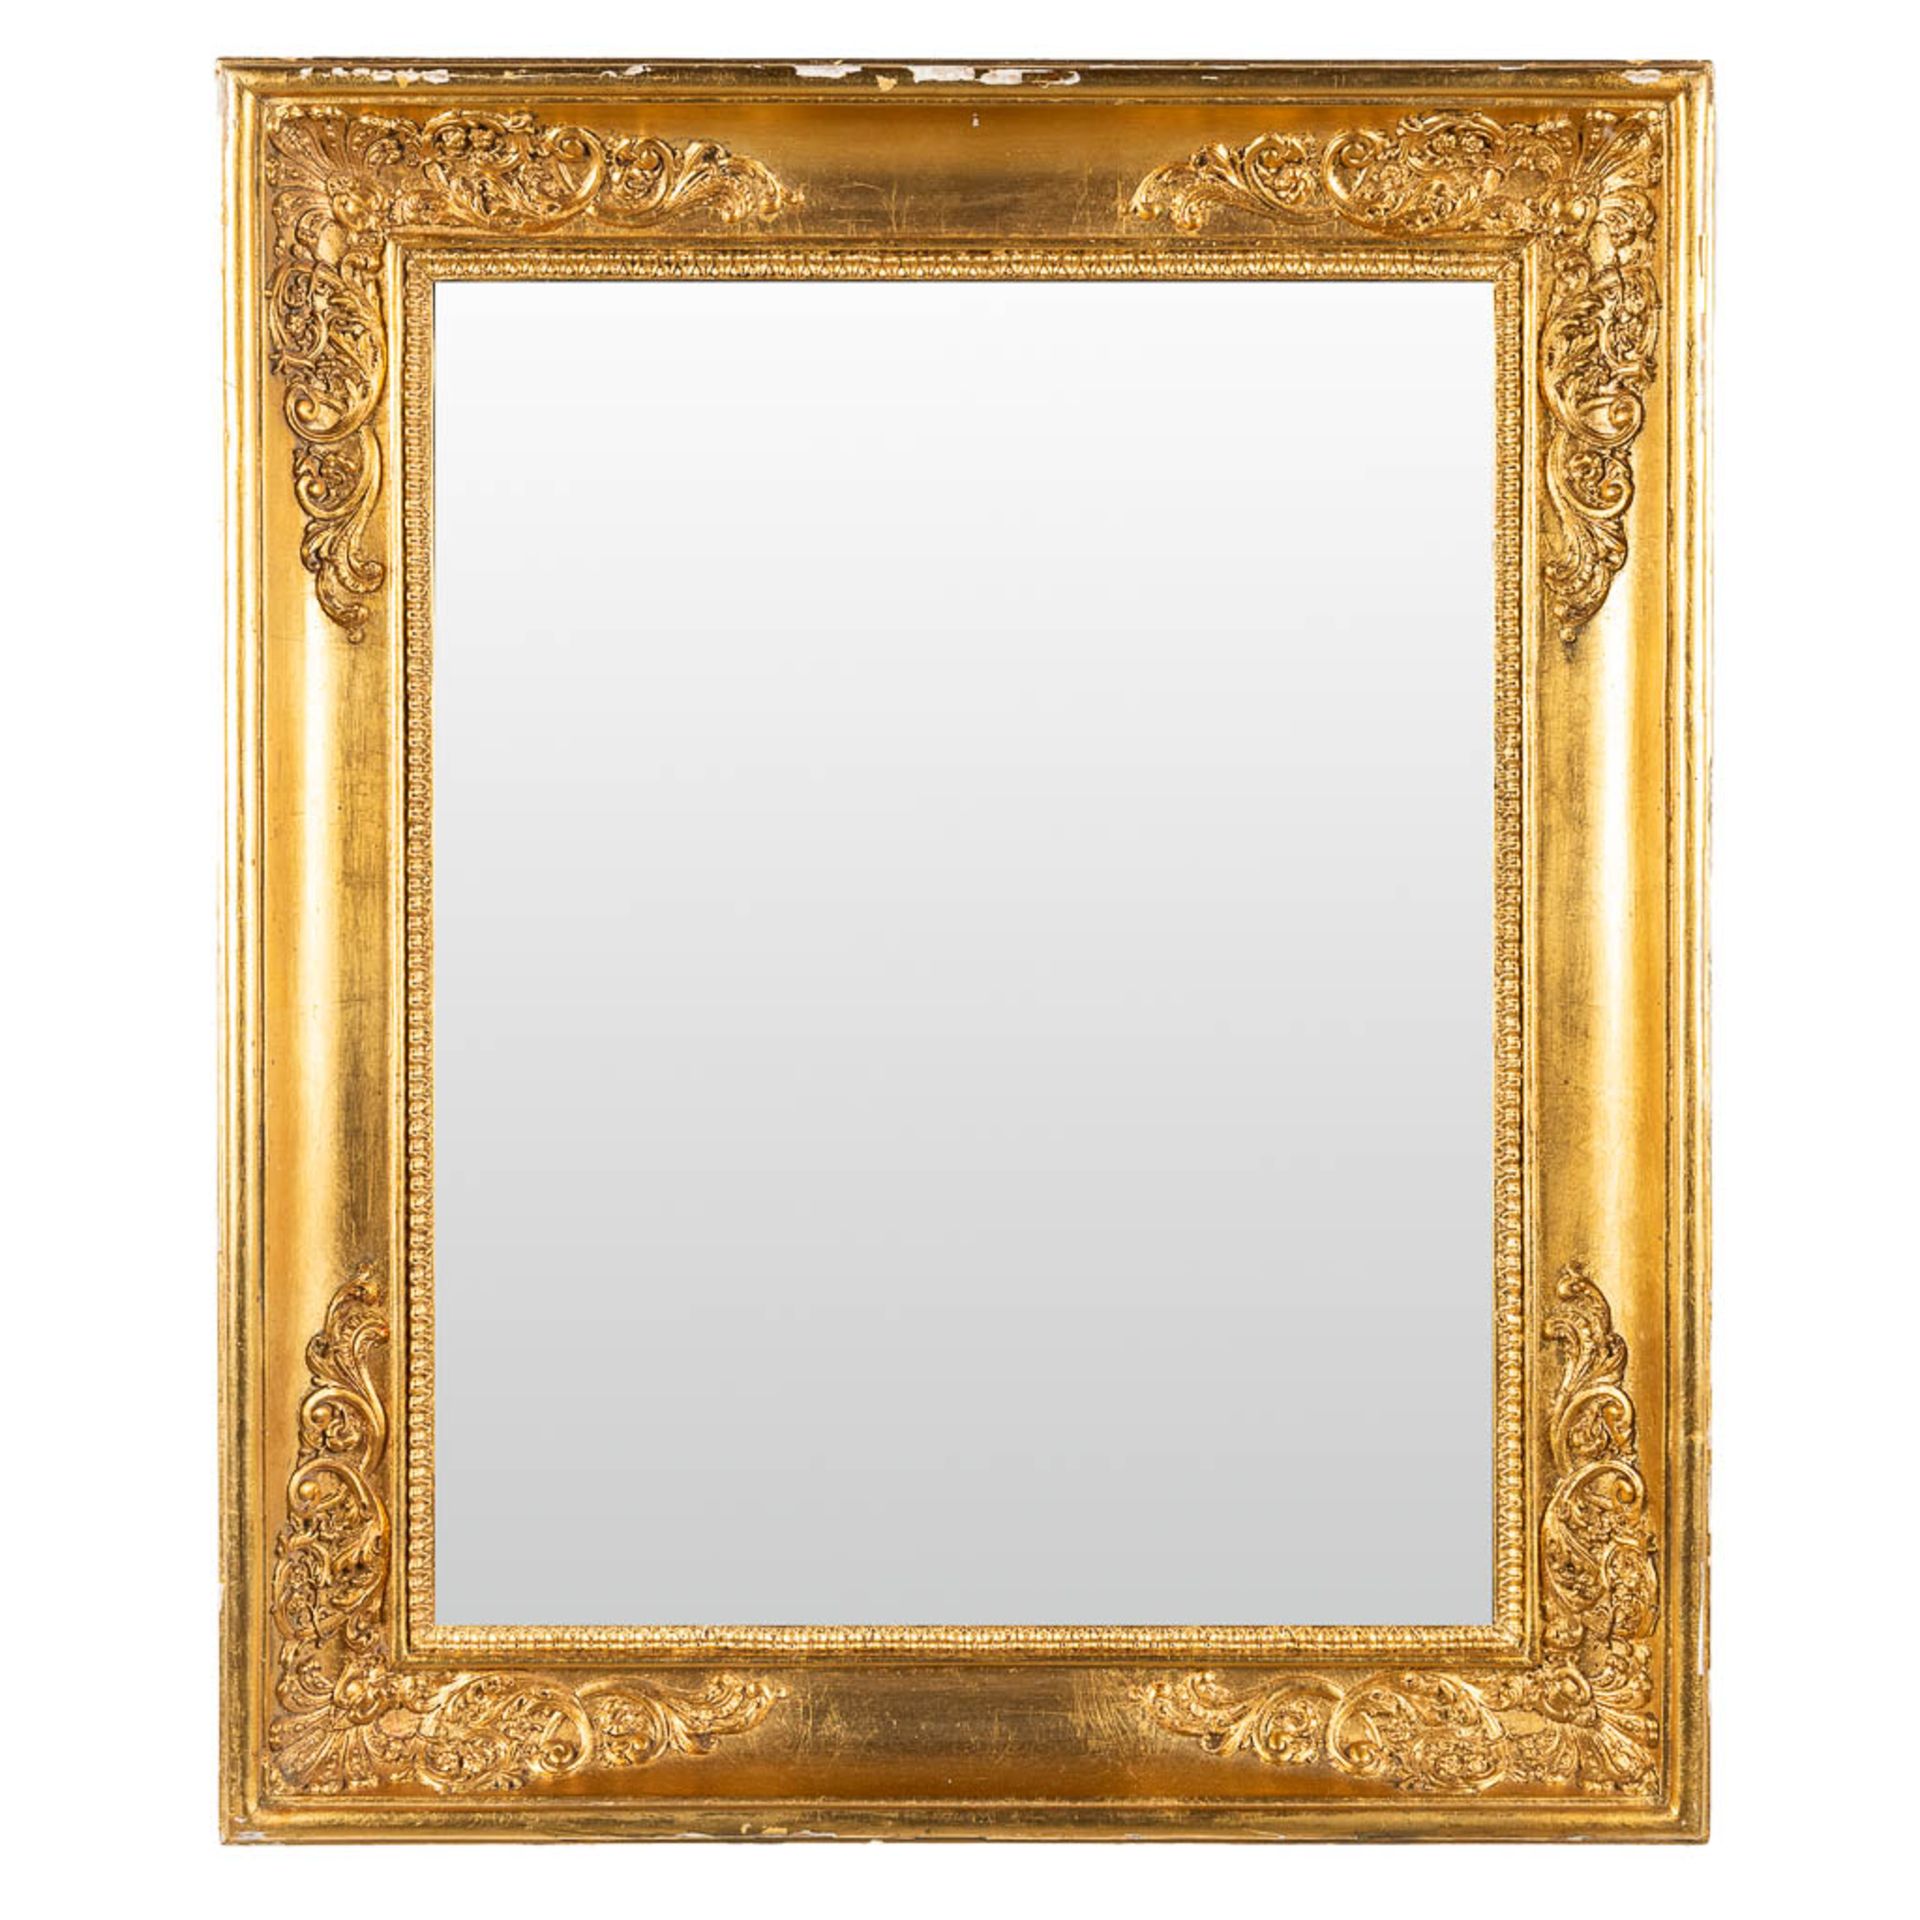 A mirror framed in an empire syle frame. (W:62 x H:74 cm)